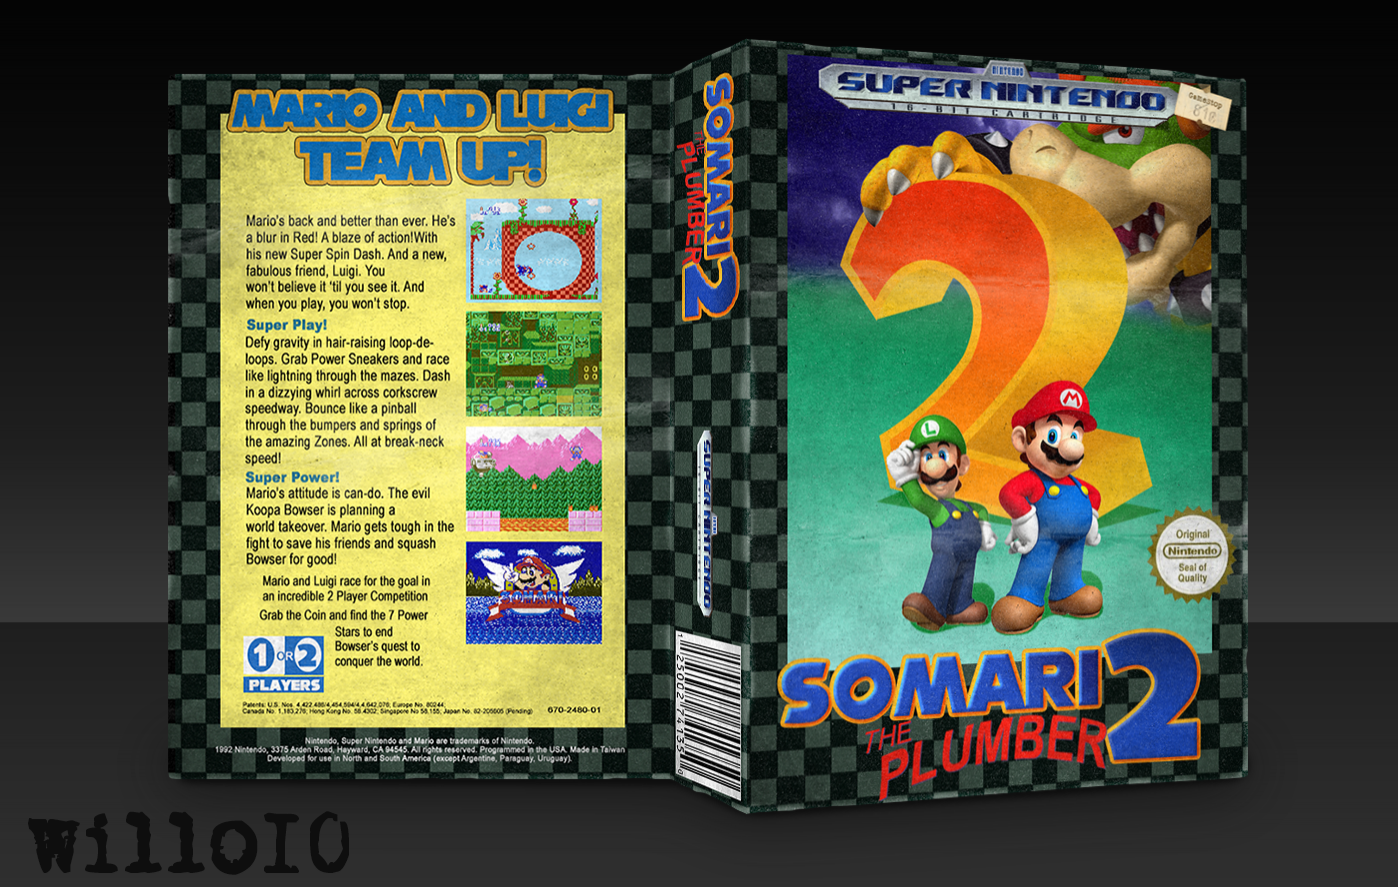 Somari the Plumber 2 box cover